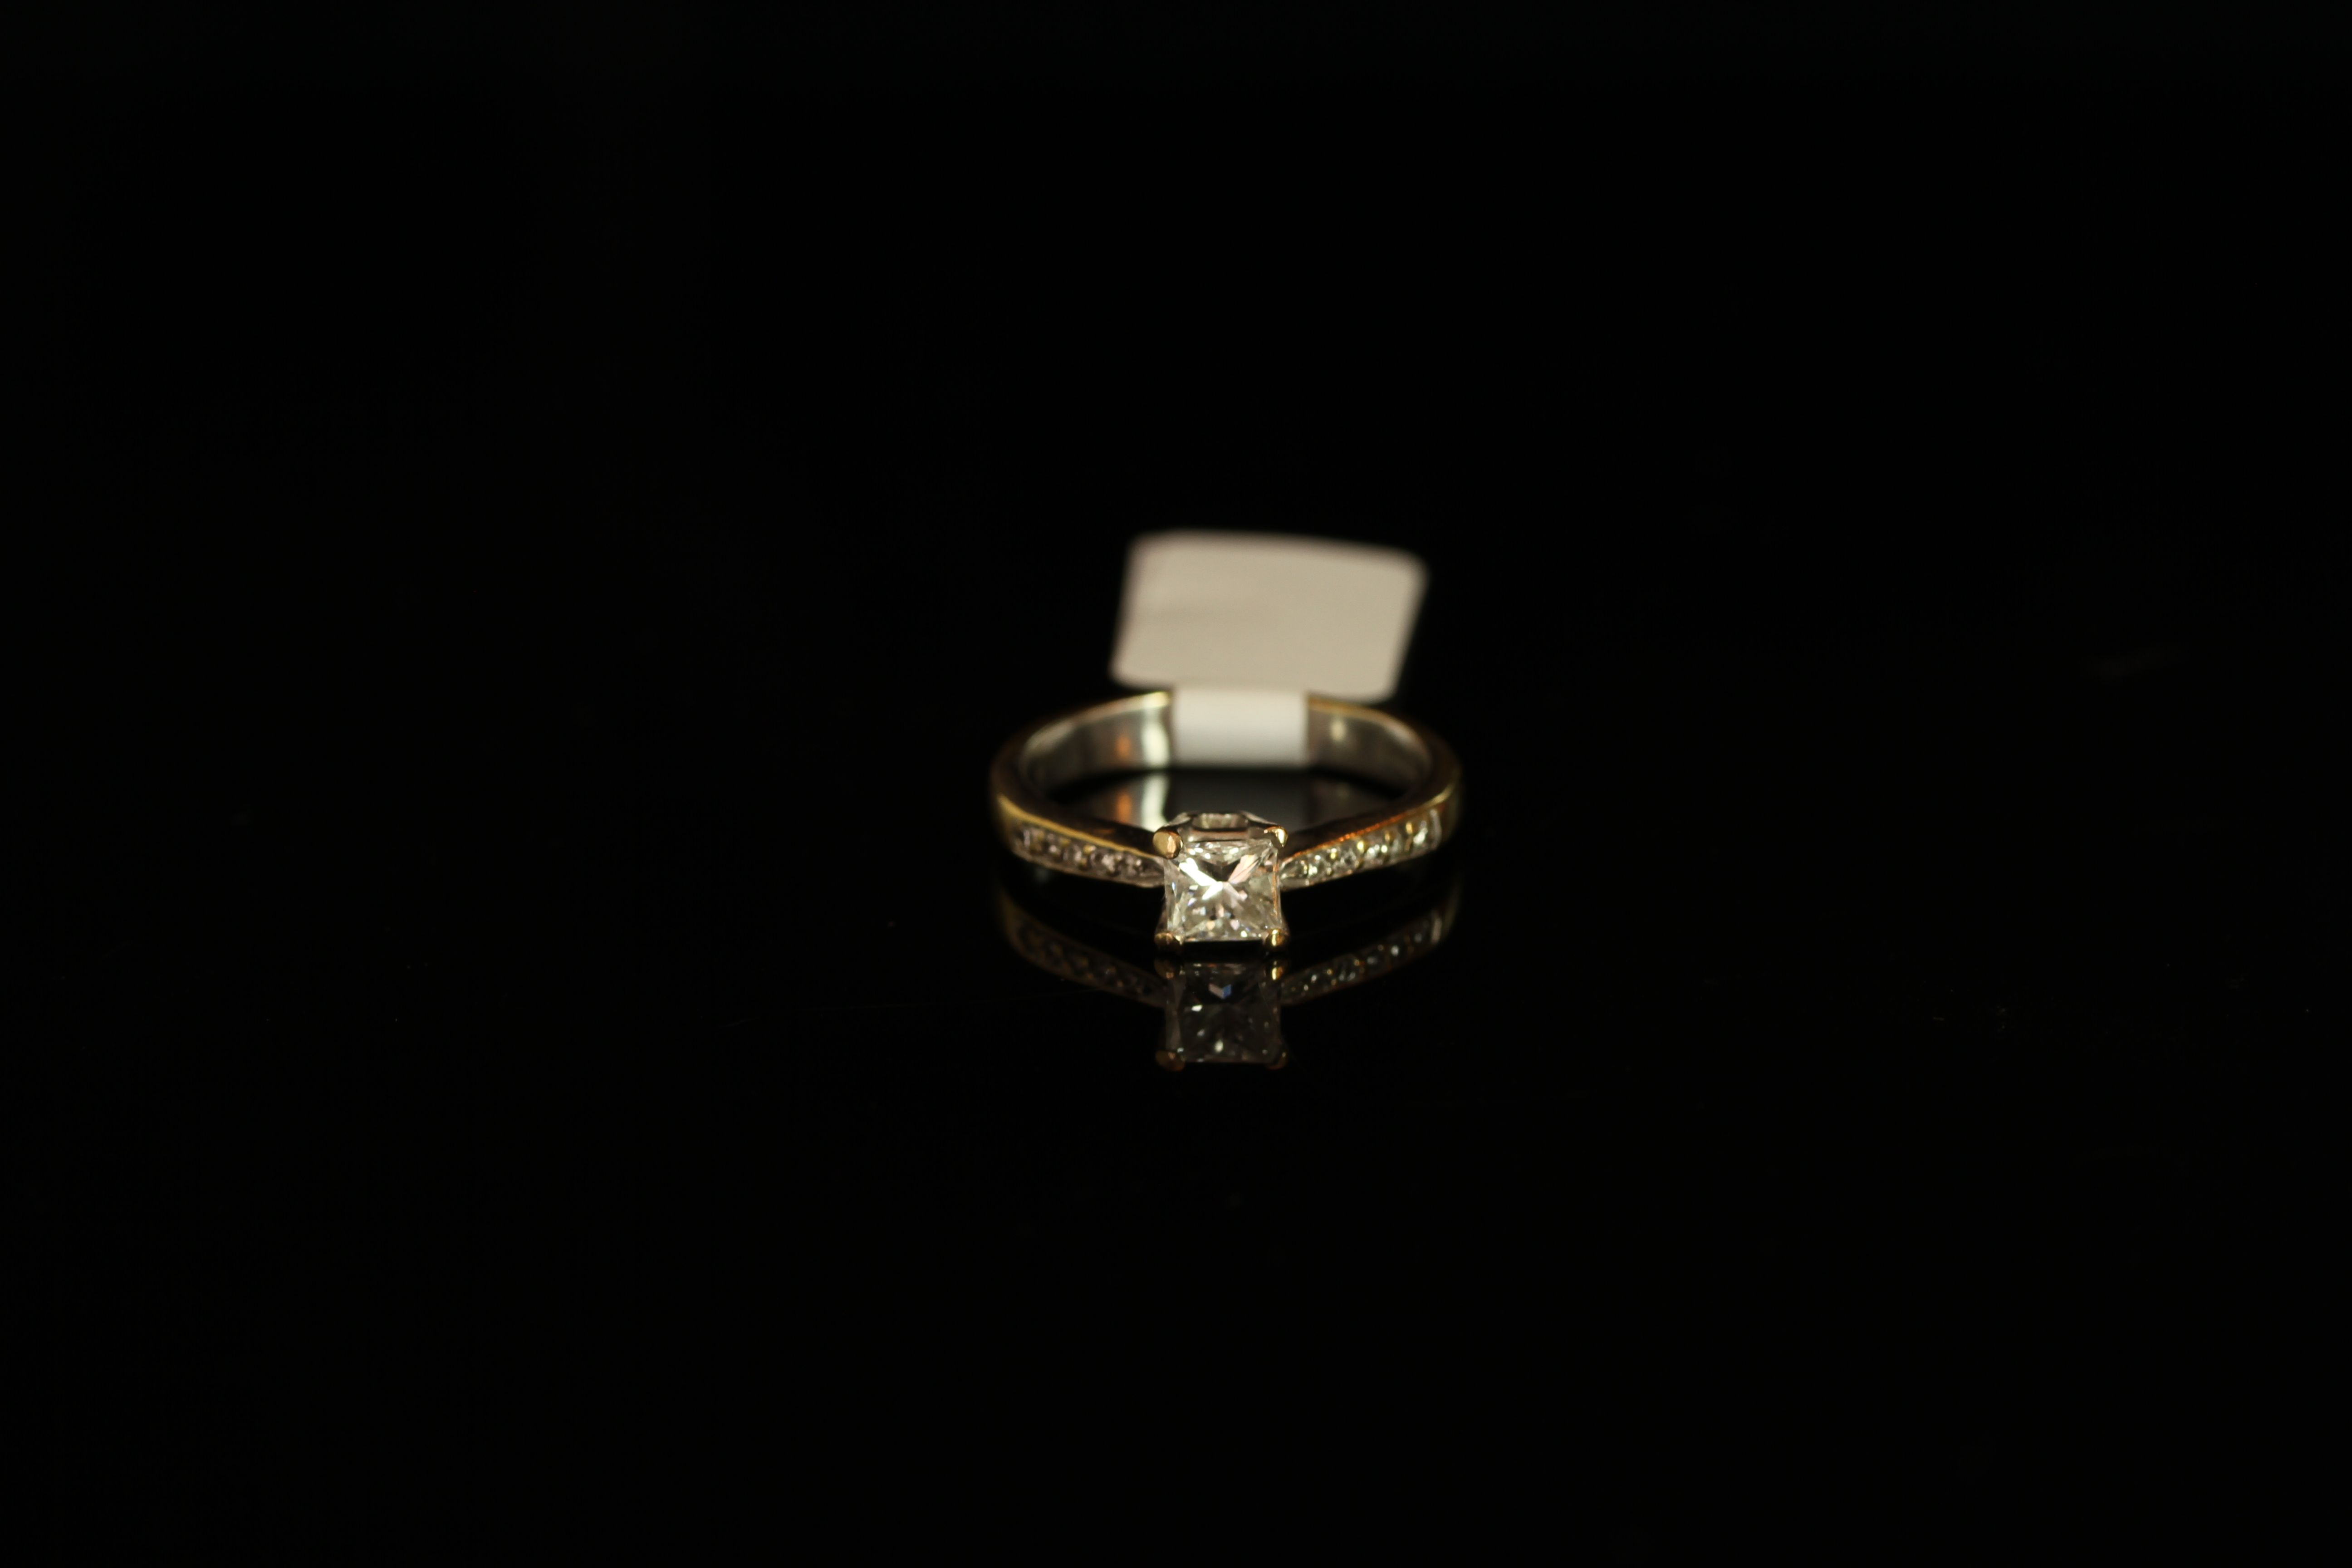 18CT SINGLE PRINCESS CUT DIAMOND WITH DIAMOND SET SHOULDERS, RING,centre stone estimated as 4x4mm,